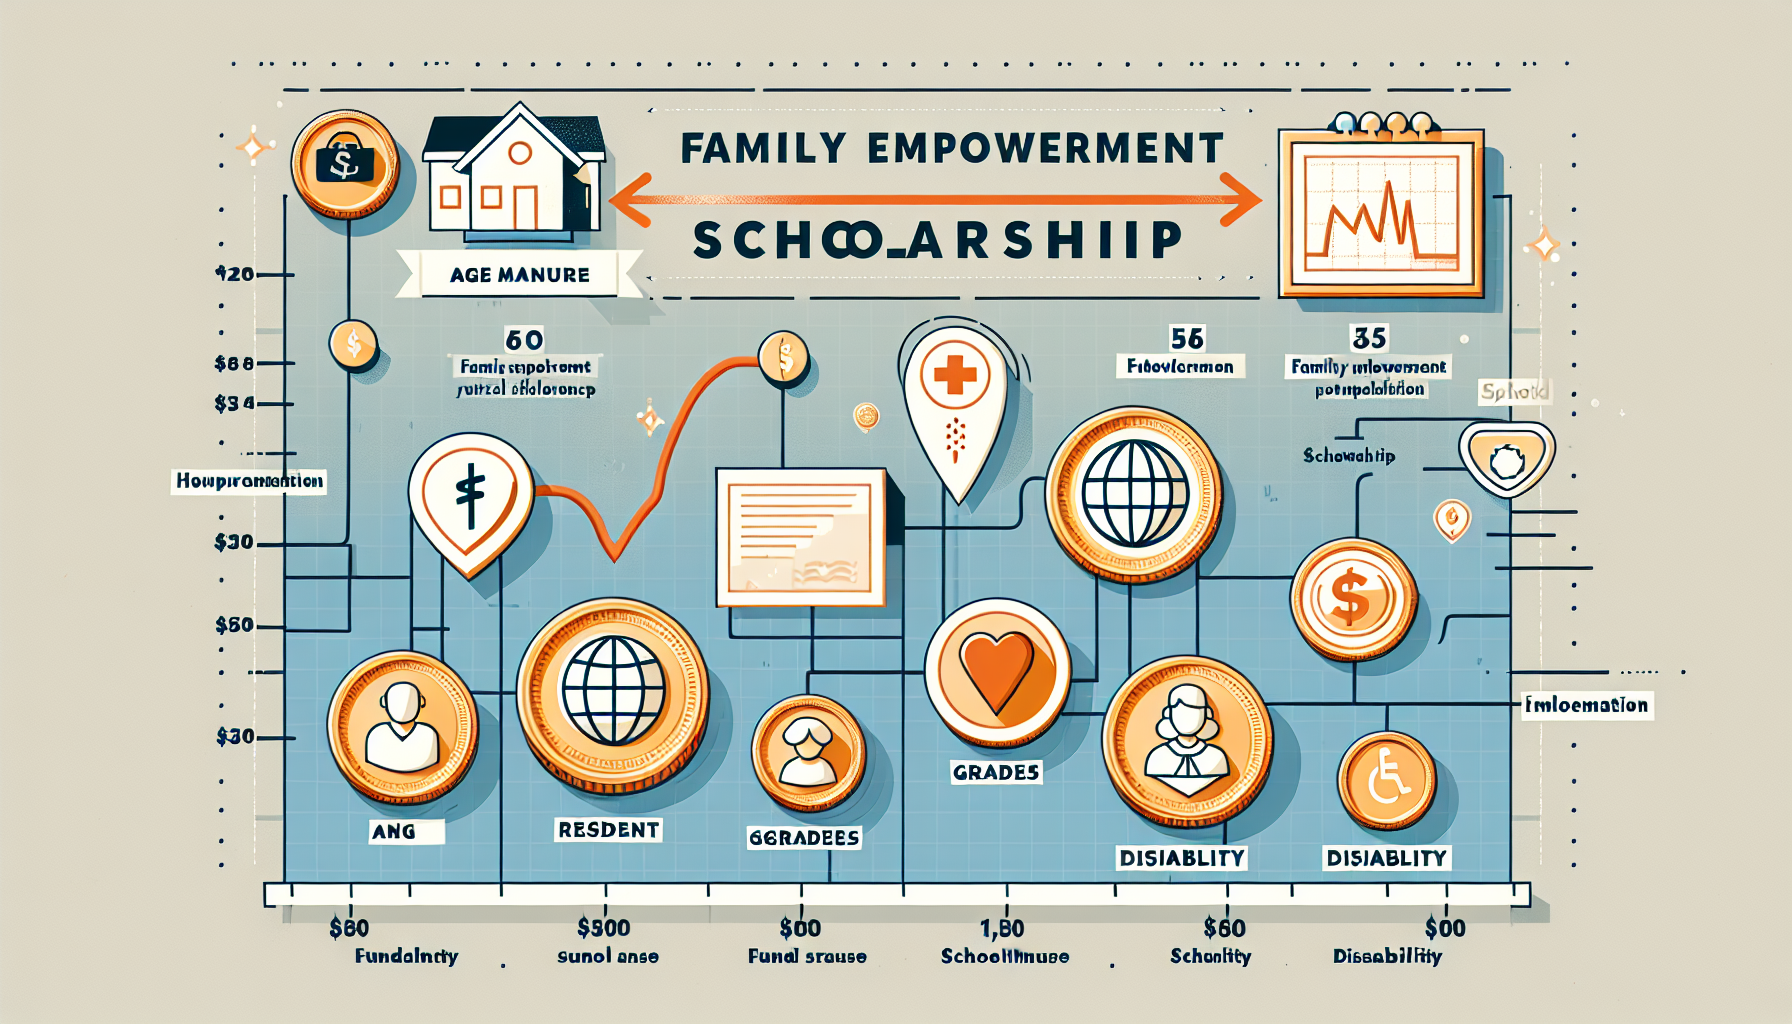 Eligibility criteria for the Family Empowerment Scholarship